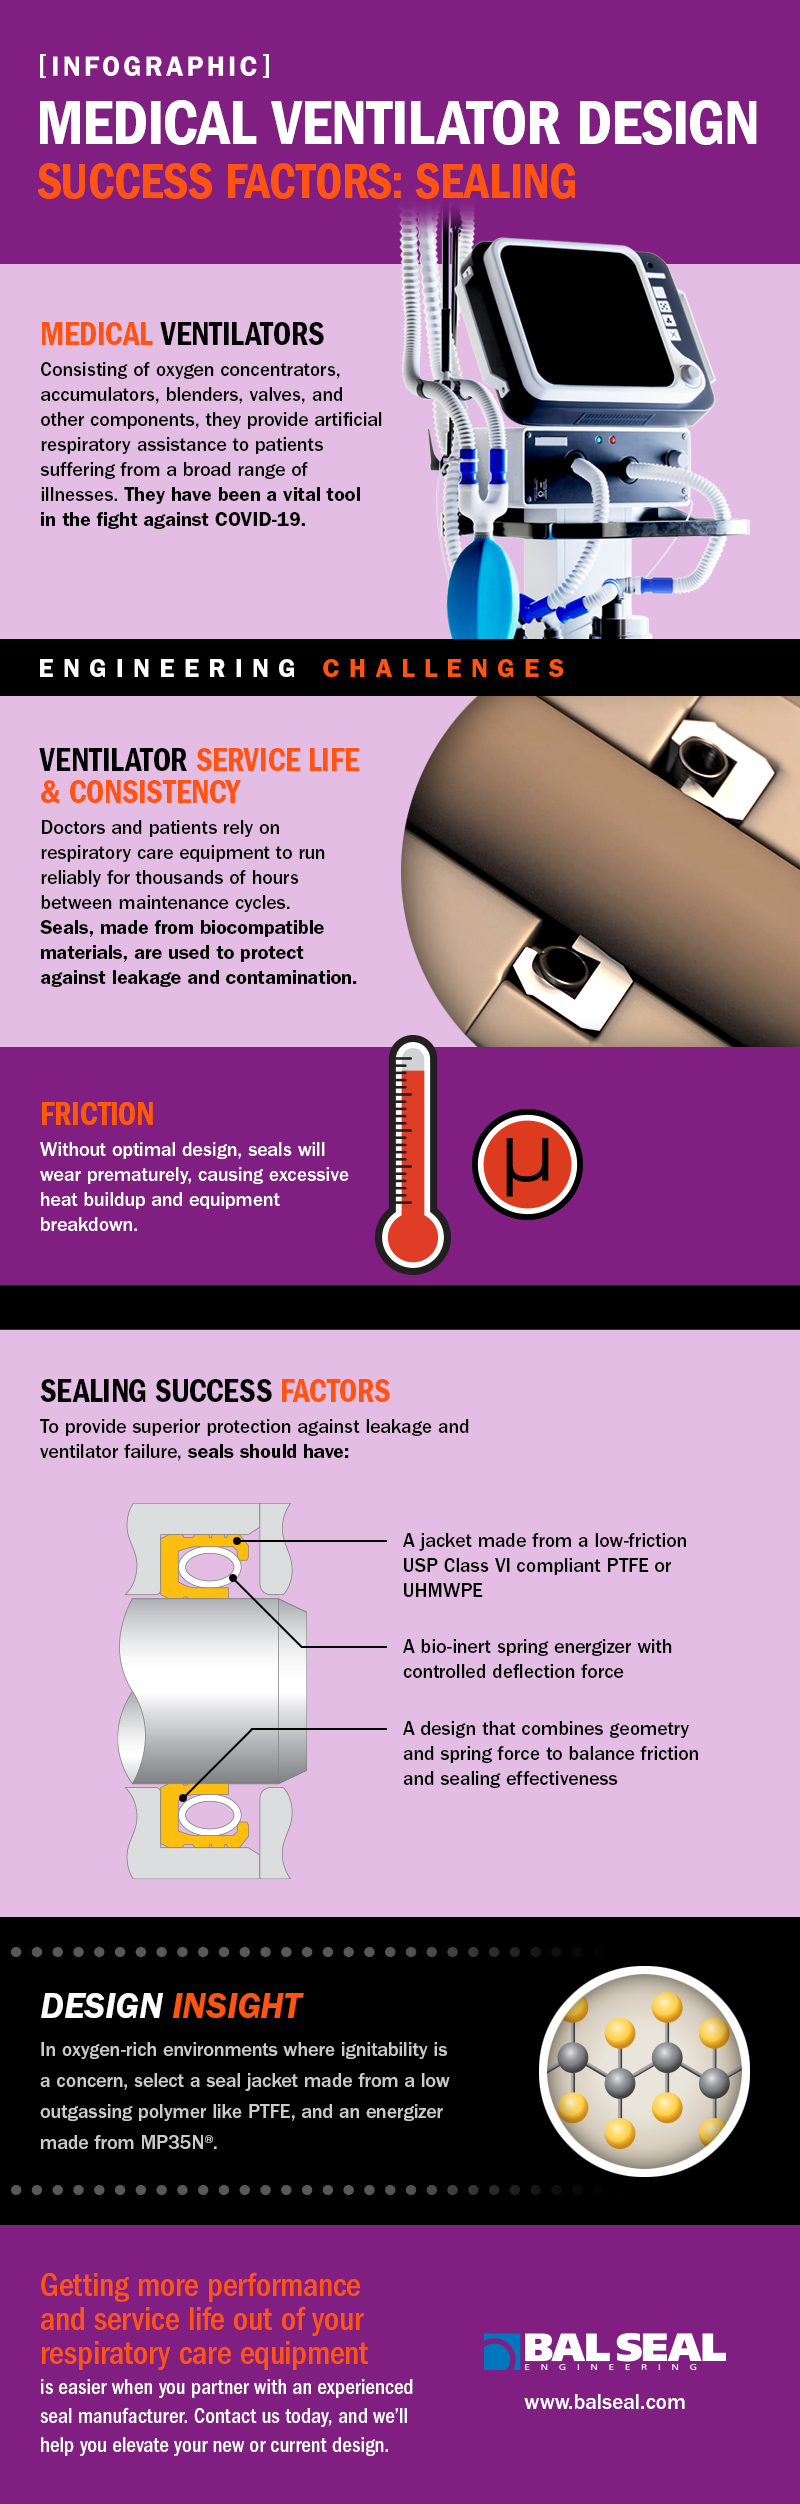 Bal Seal Ventilator Infographic